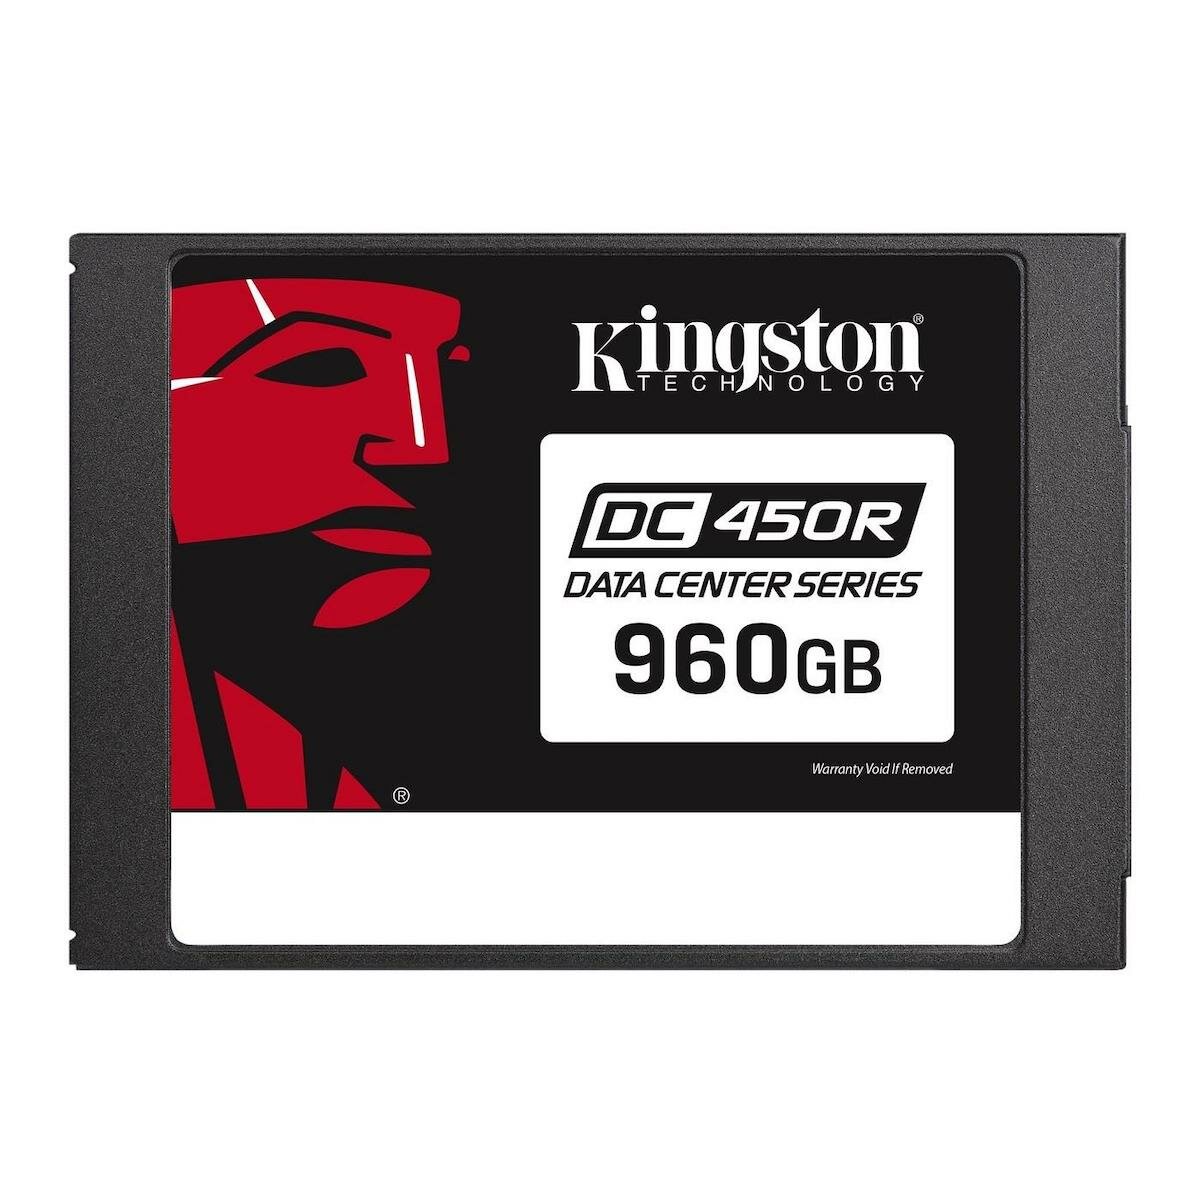 Dysk SSD Kingston DC450R 960GB 2.5 frontem 